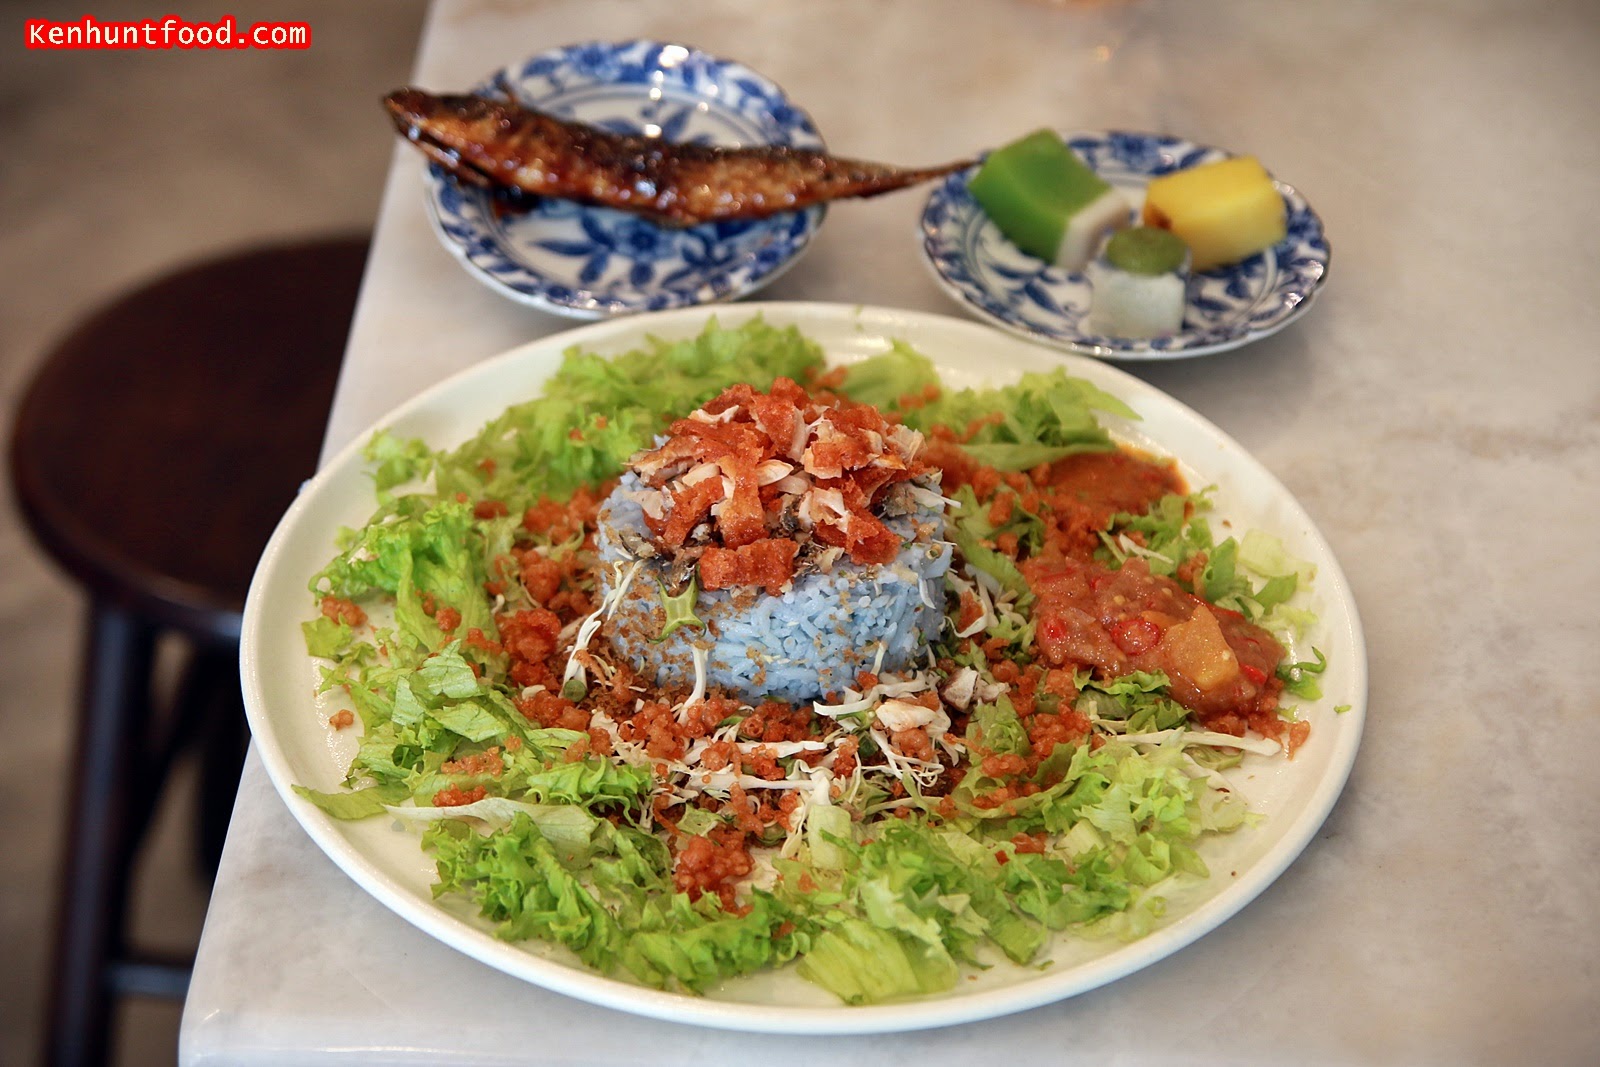 Ken Hunts Food: Li Er Cafe (莉儿) @ Burmah Road, Pulau Tikus 